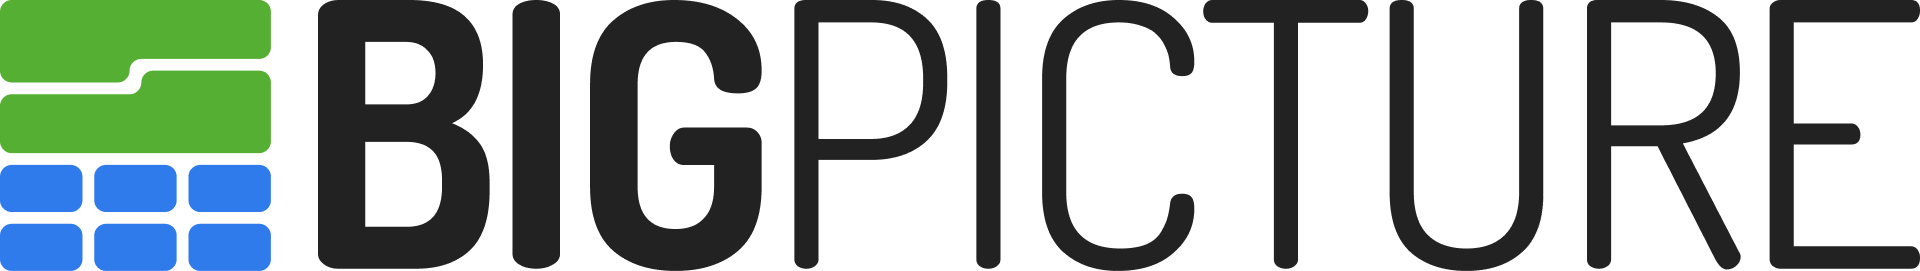 BigPicture logo